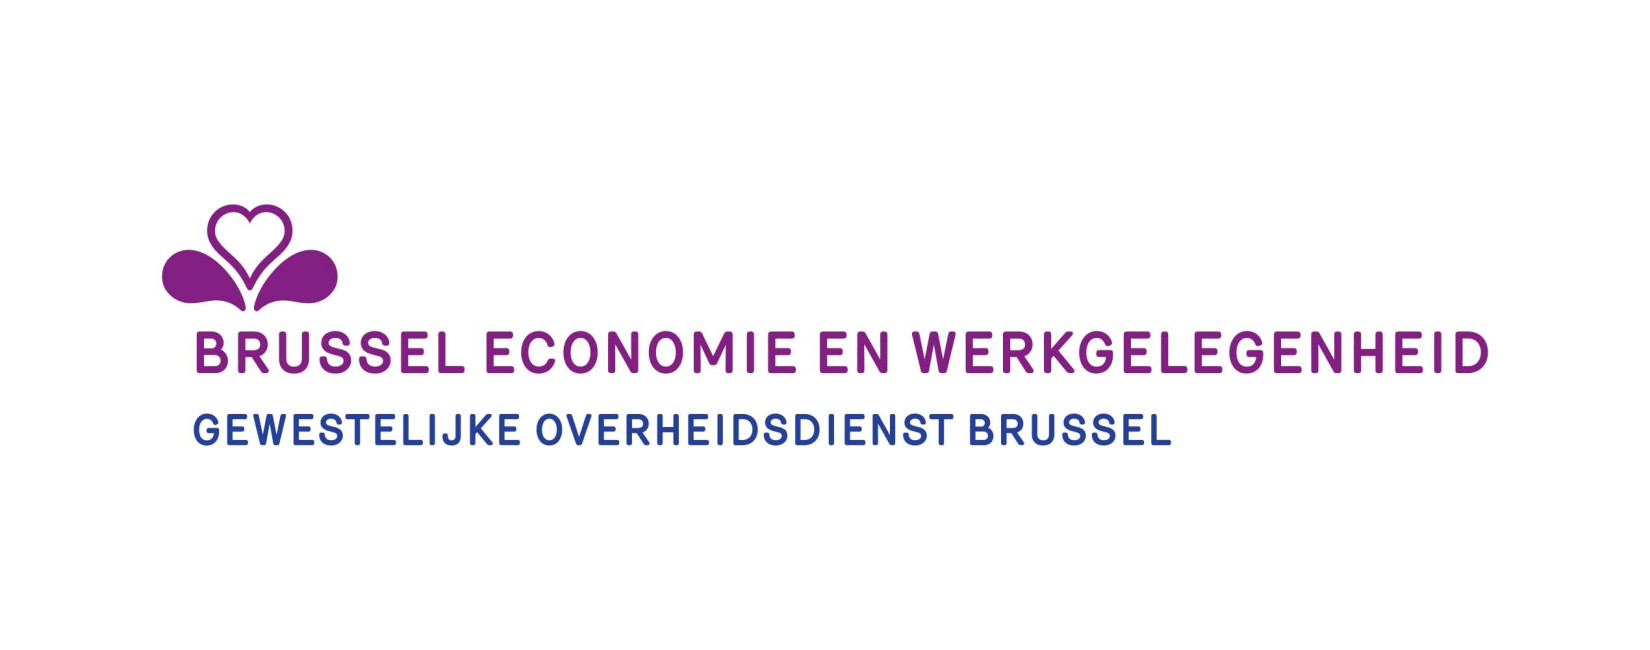 Brussel economie logo